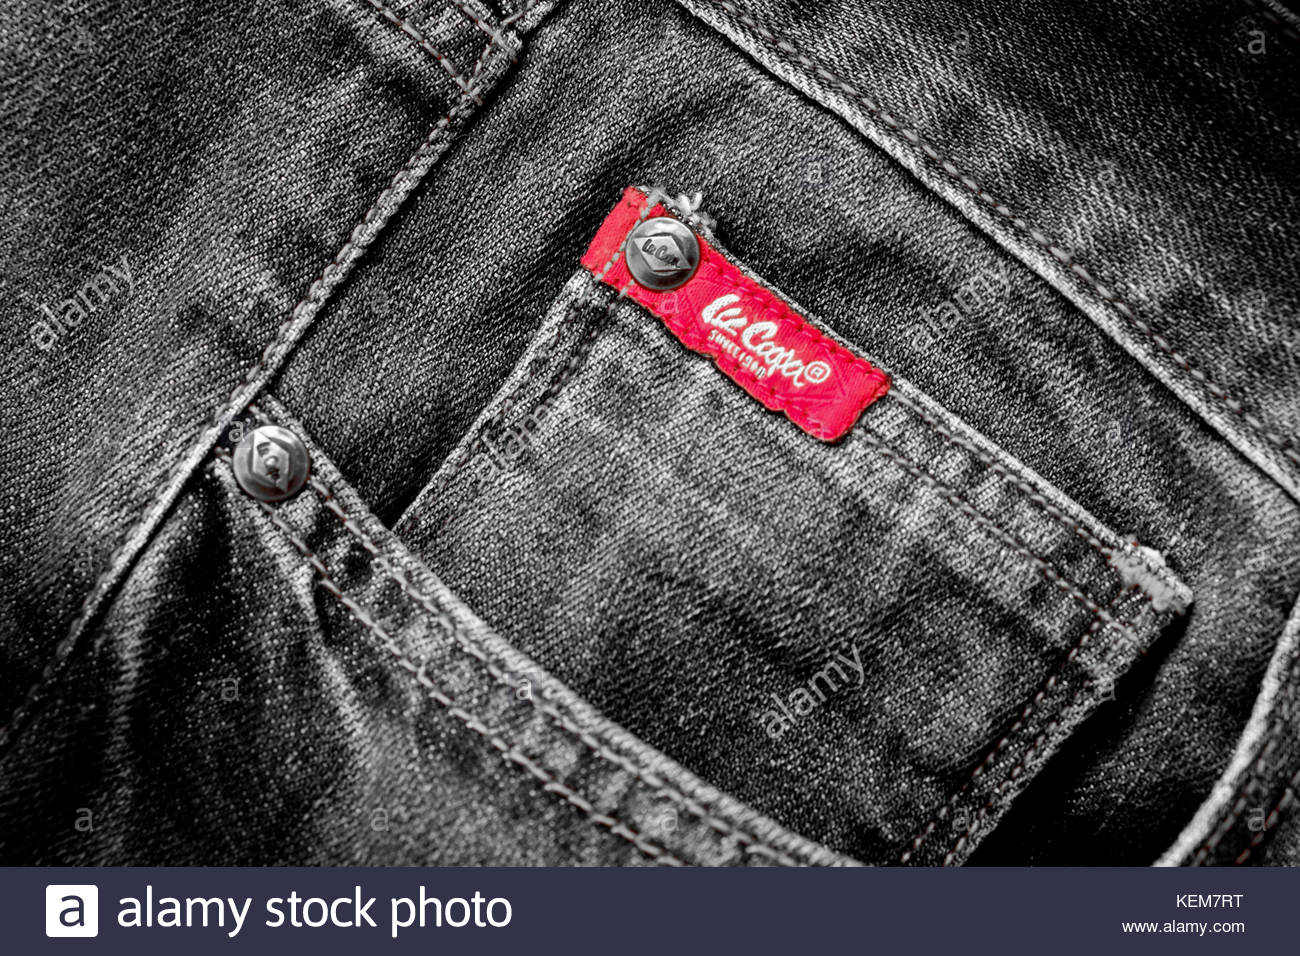 lee cooper 1908 jeans